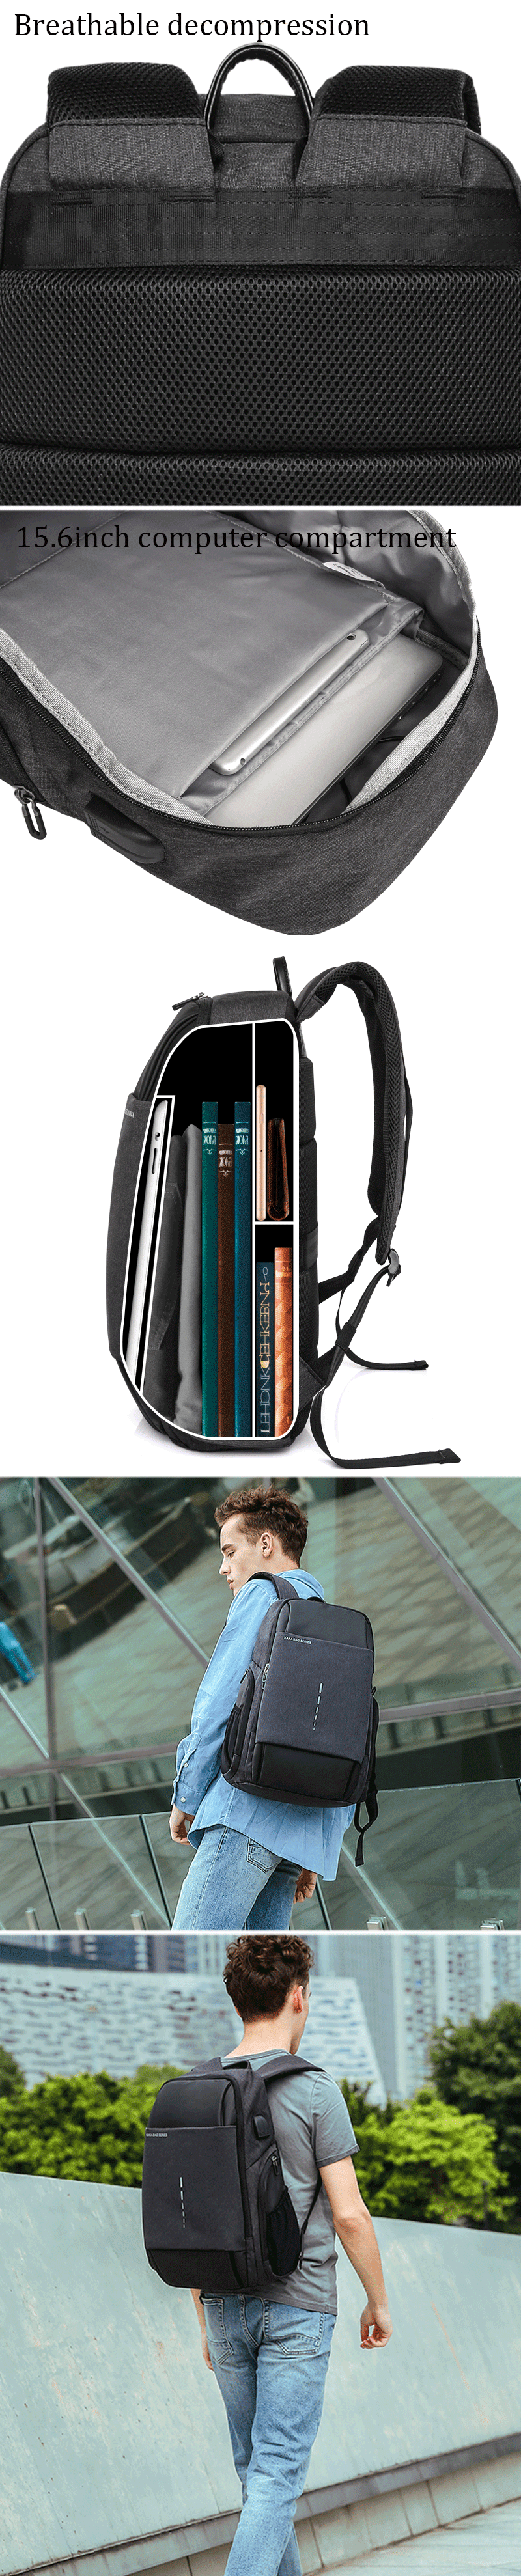 USB-Backpack-Anti-thief-Shoulder-Bag-156-Inch-Laptop-Bag-Camping-Travel-Bag-School-Bag-1364866-2